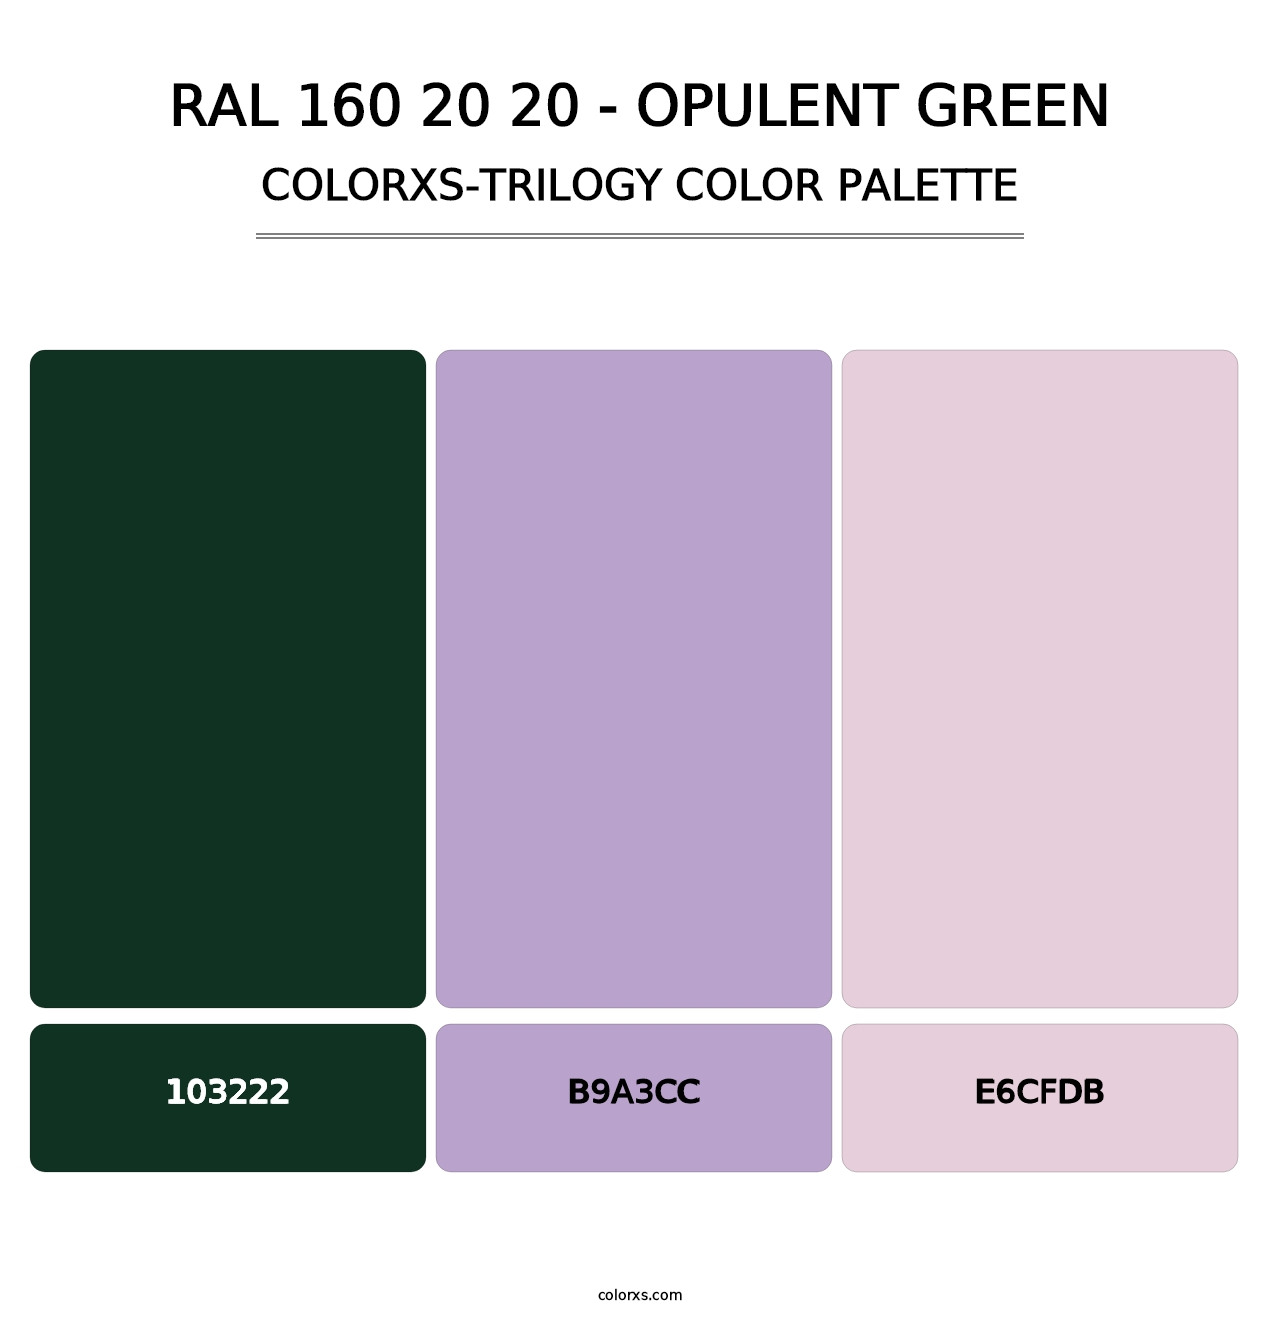 RAL 160 20 20 - Opulent Green - Colorxs Trilogy Palette